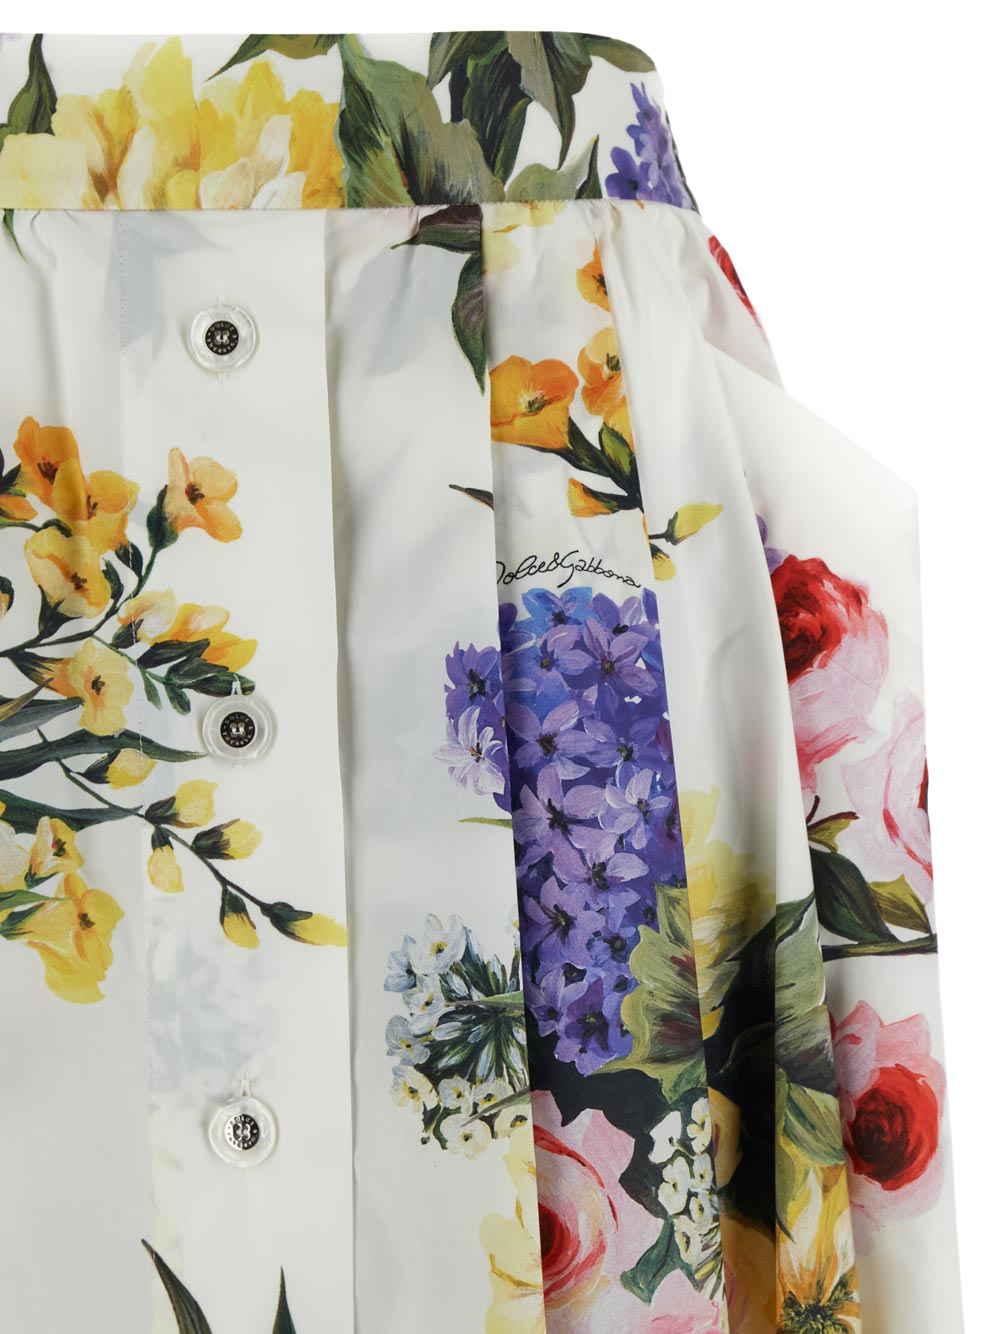 Dolce & Gabbana Garden-Printed Cotton Circle Skirt